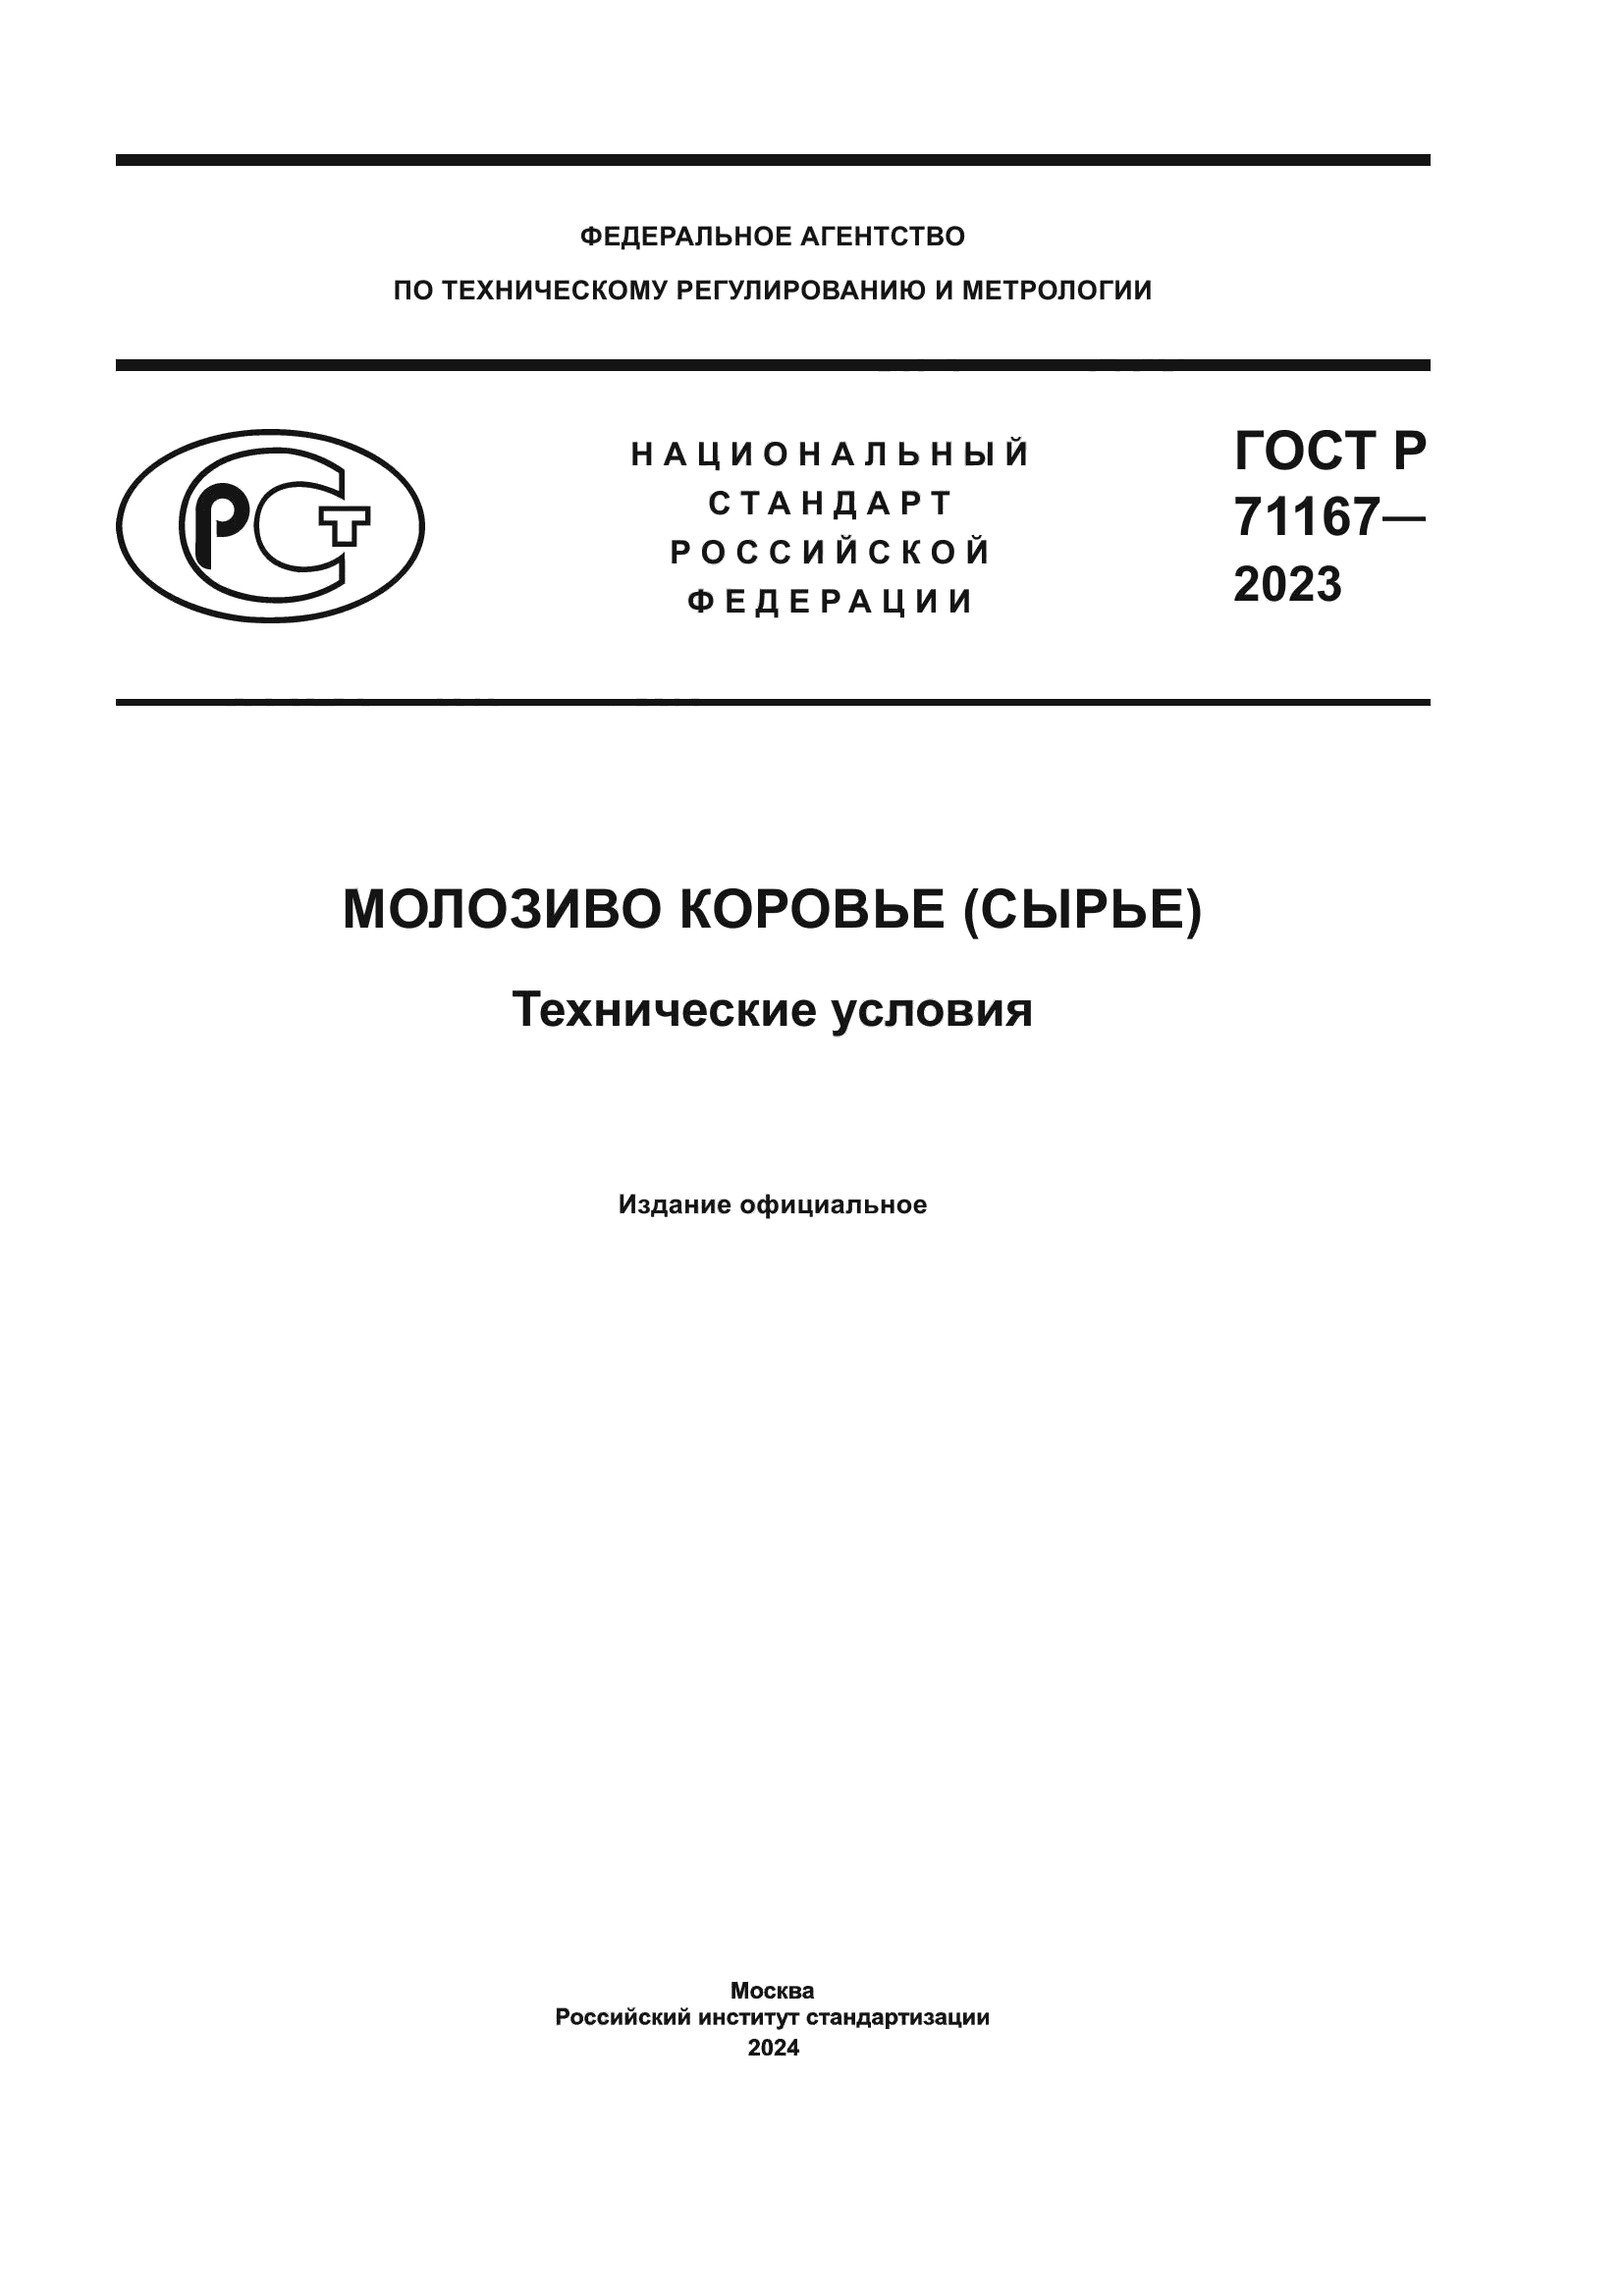 ГОСТ Р 71167-2023